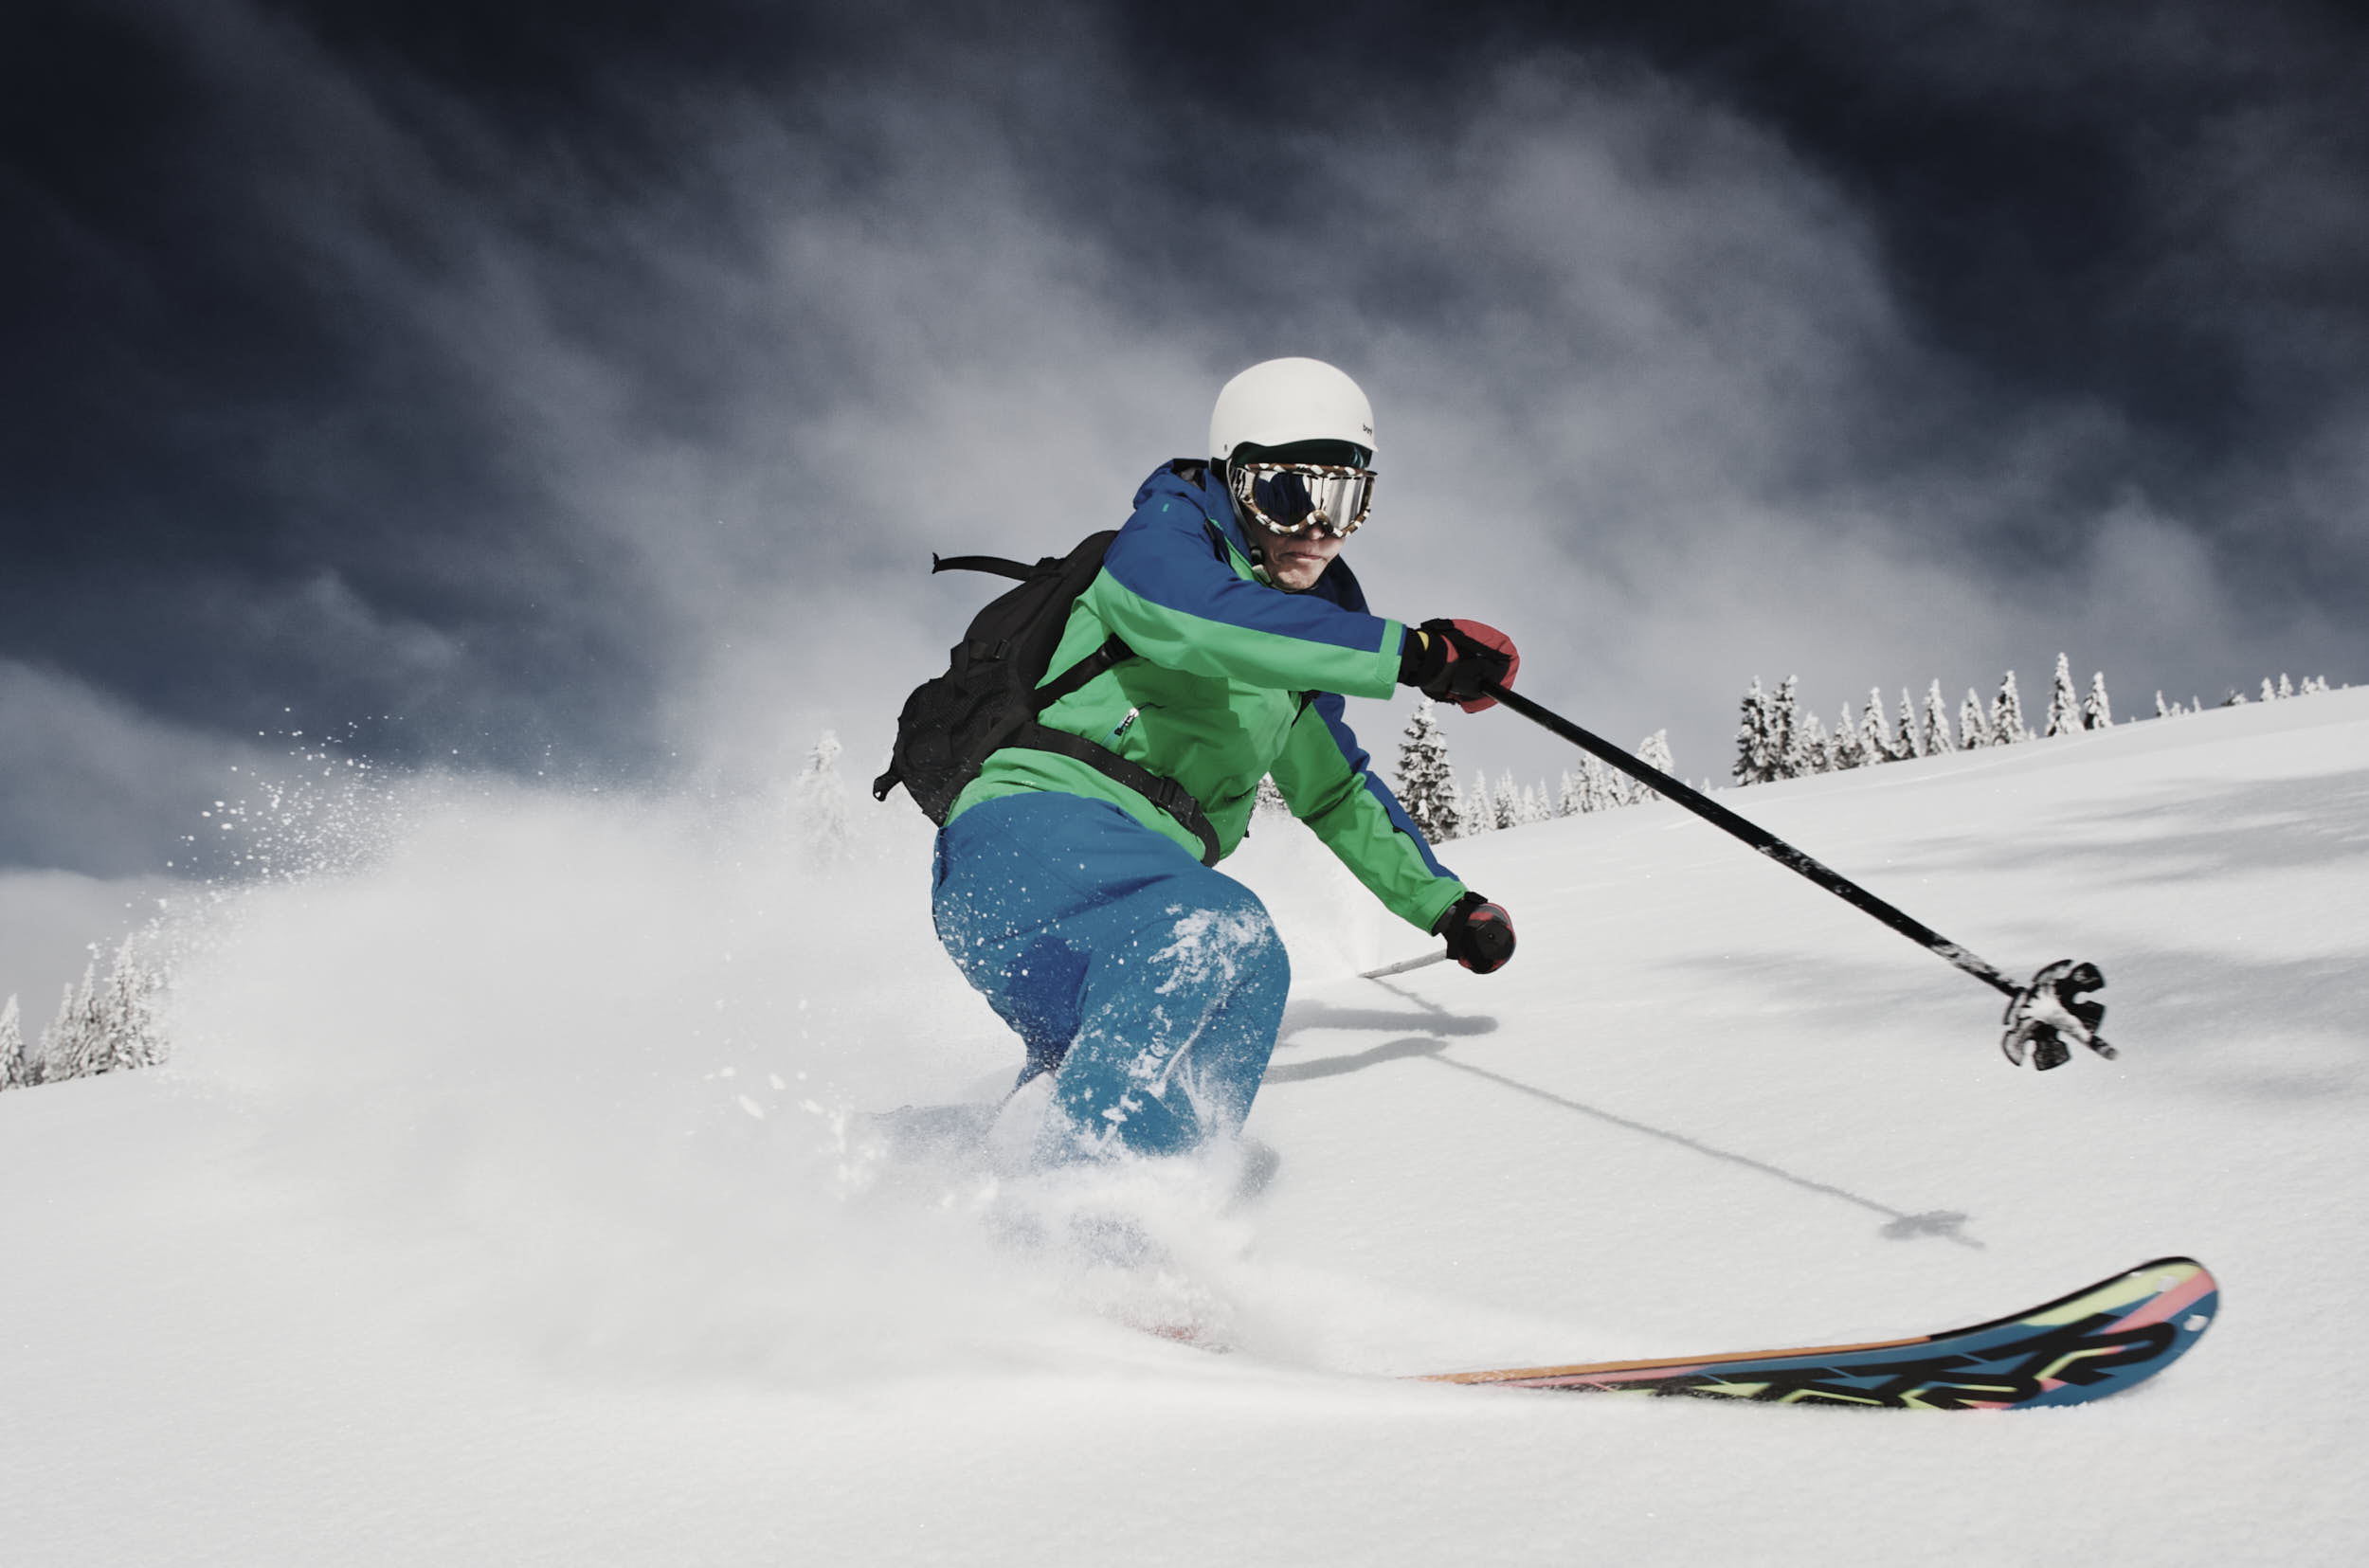 Freeride telemark skier making a turn in fresh powder snow.